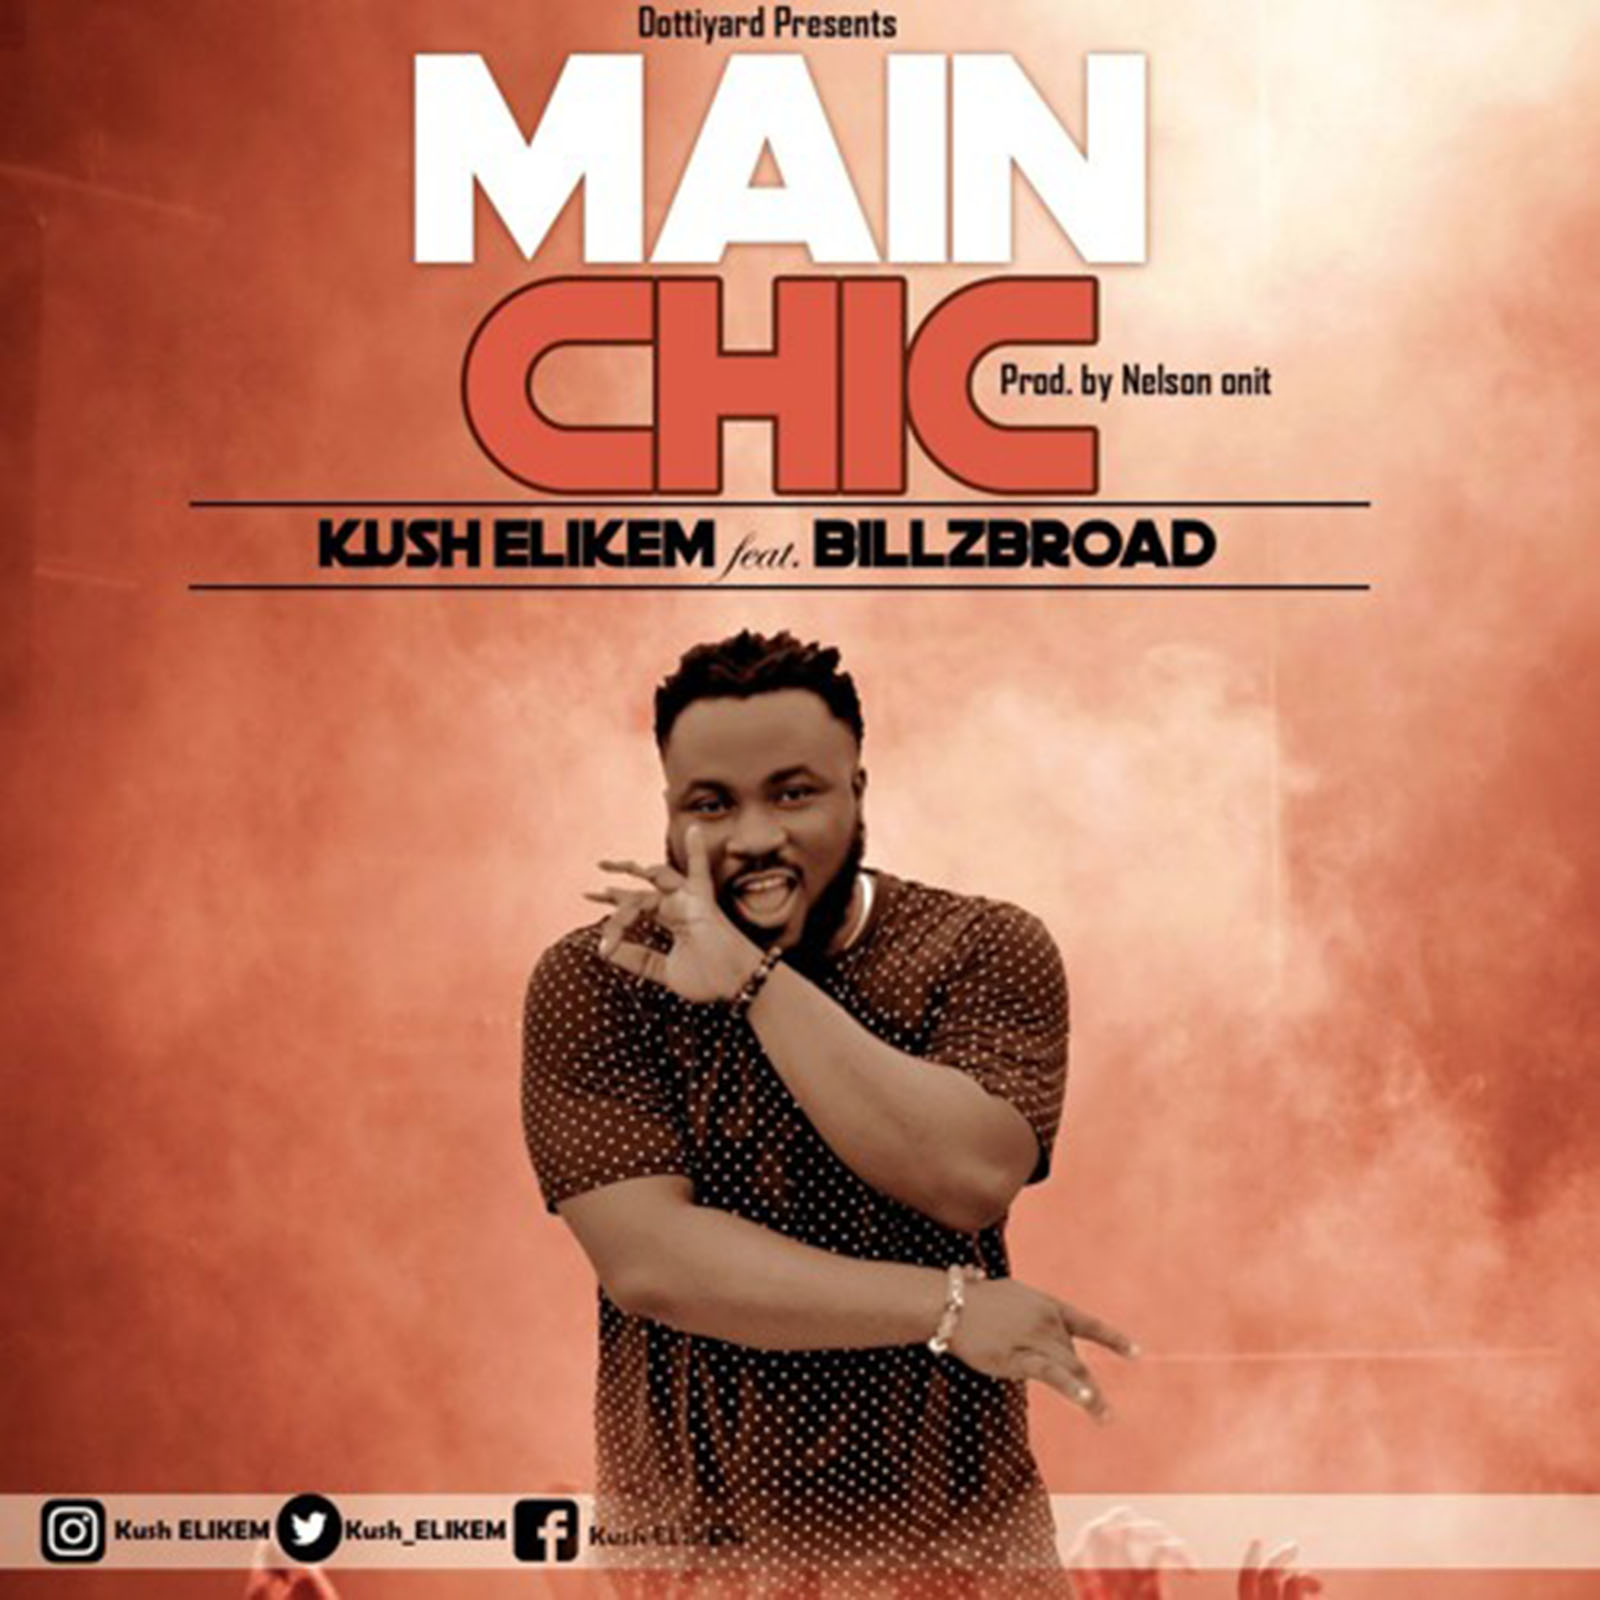 Main Chic by Kush Elikem feat. Billzbroad